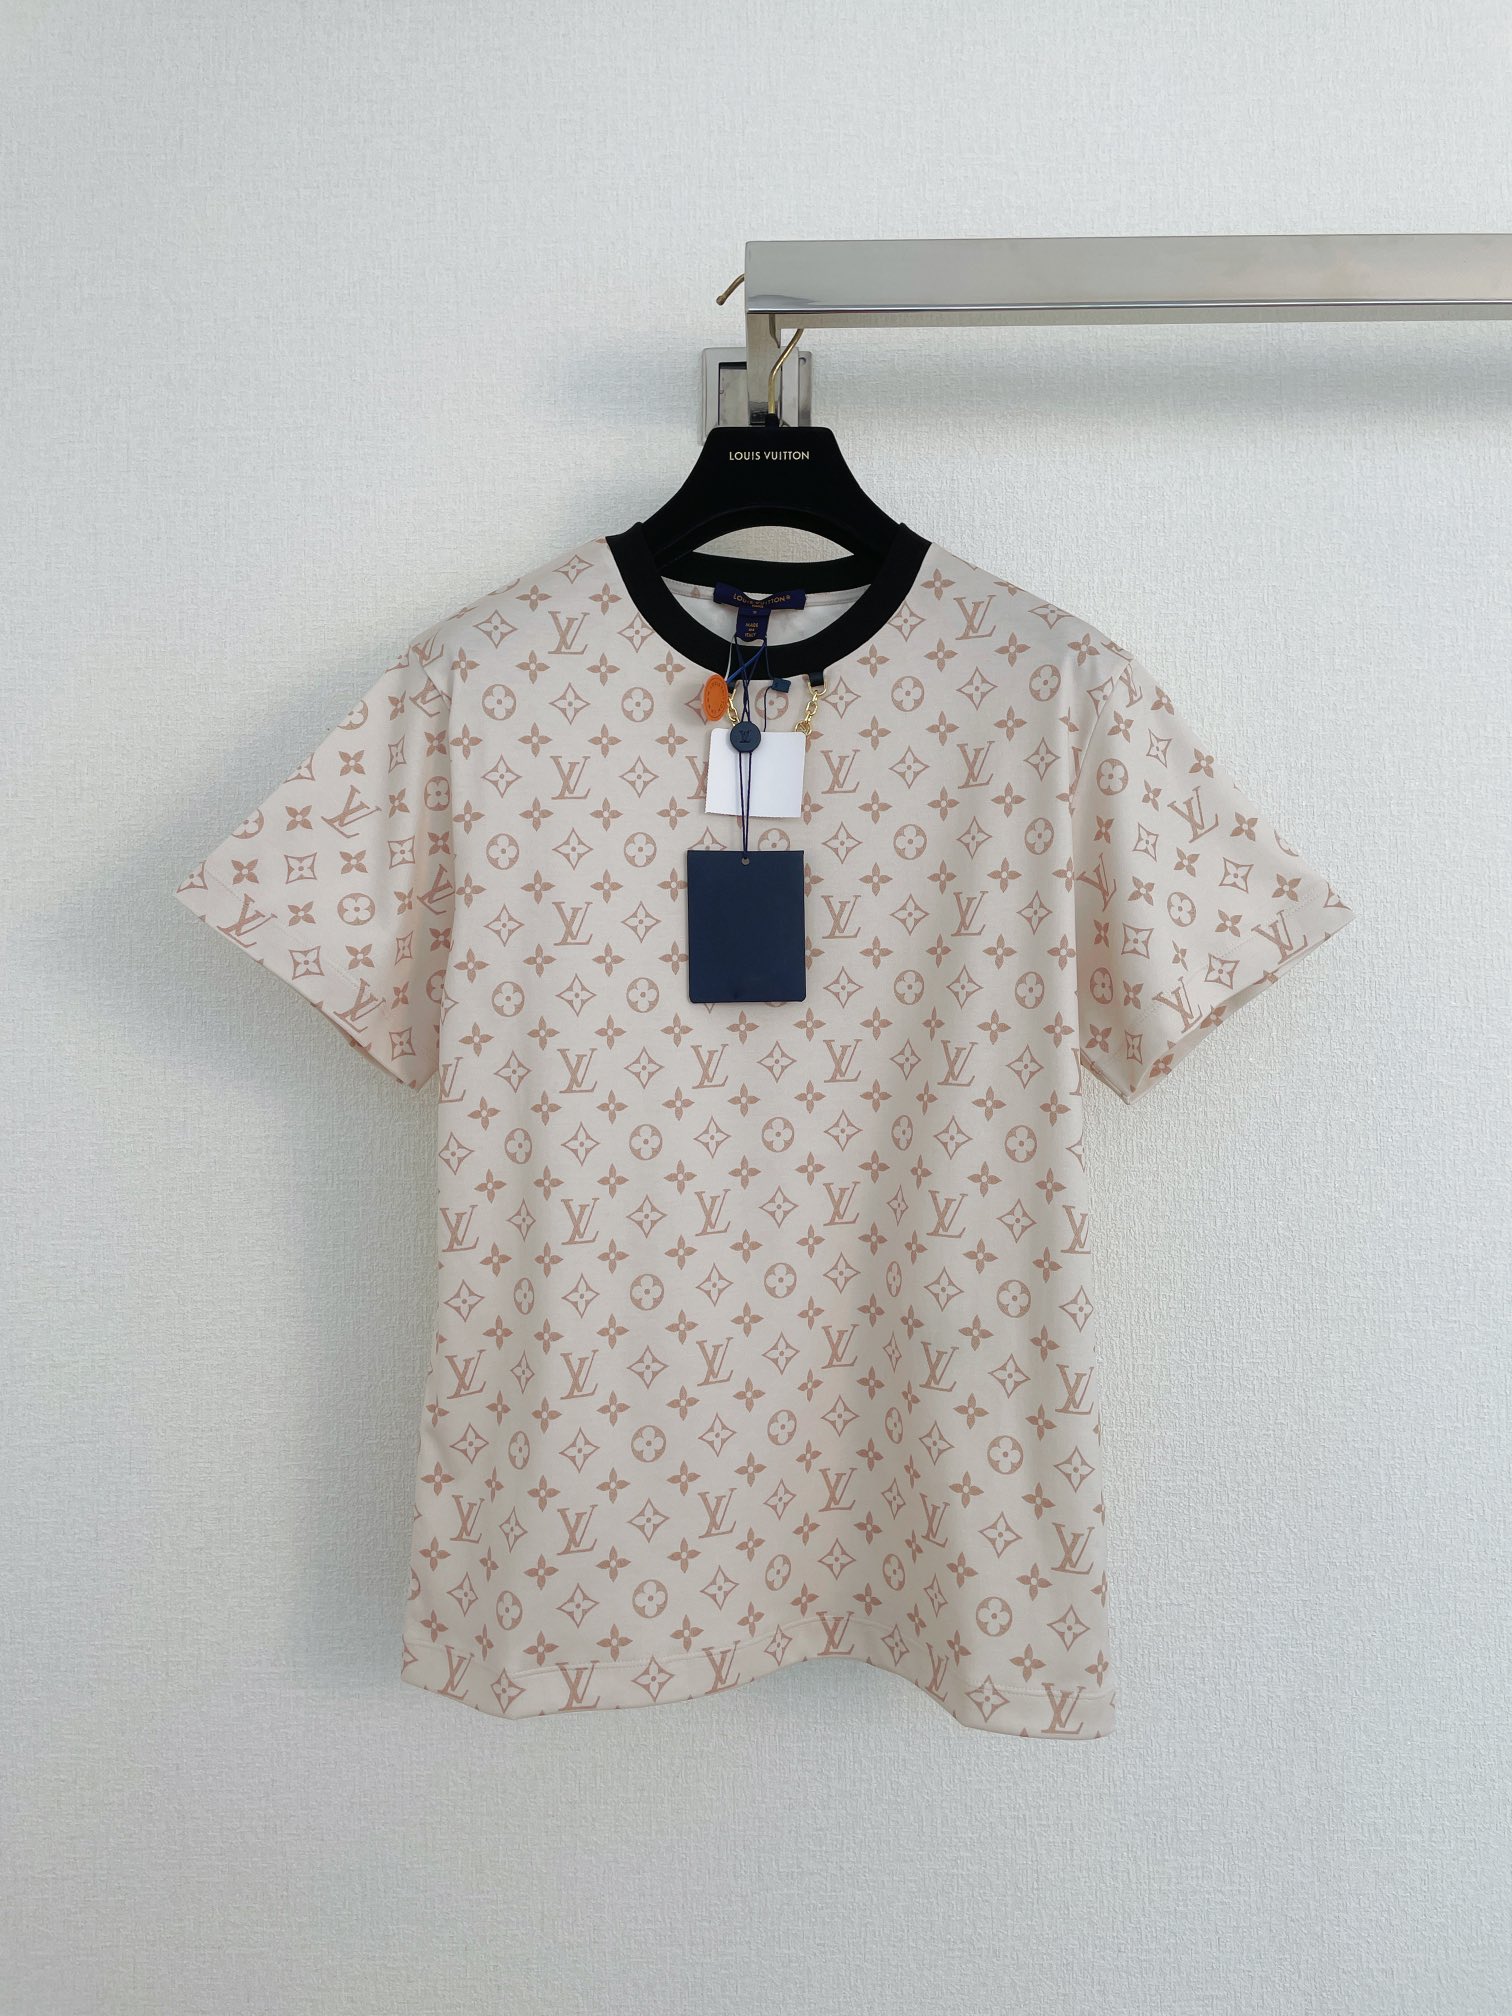 Louis Vuitton Clothing T-Shirt Apricot Color Printing Vintage Short Sleeve